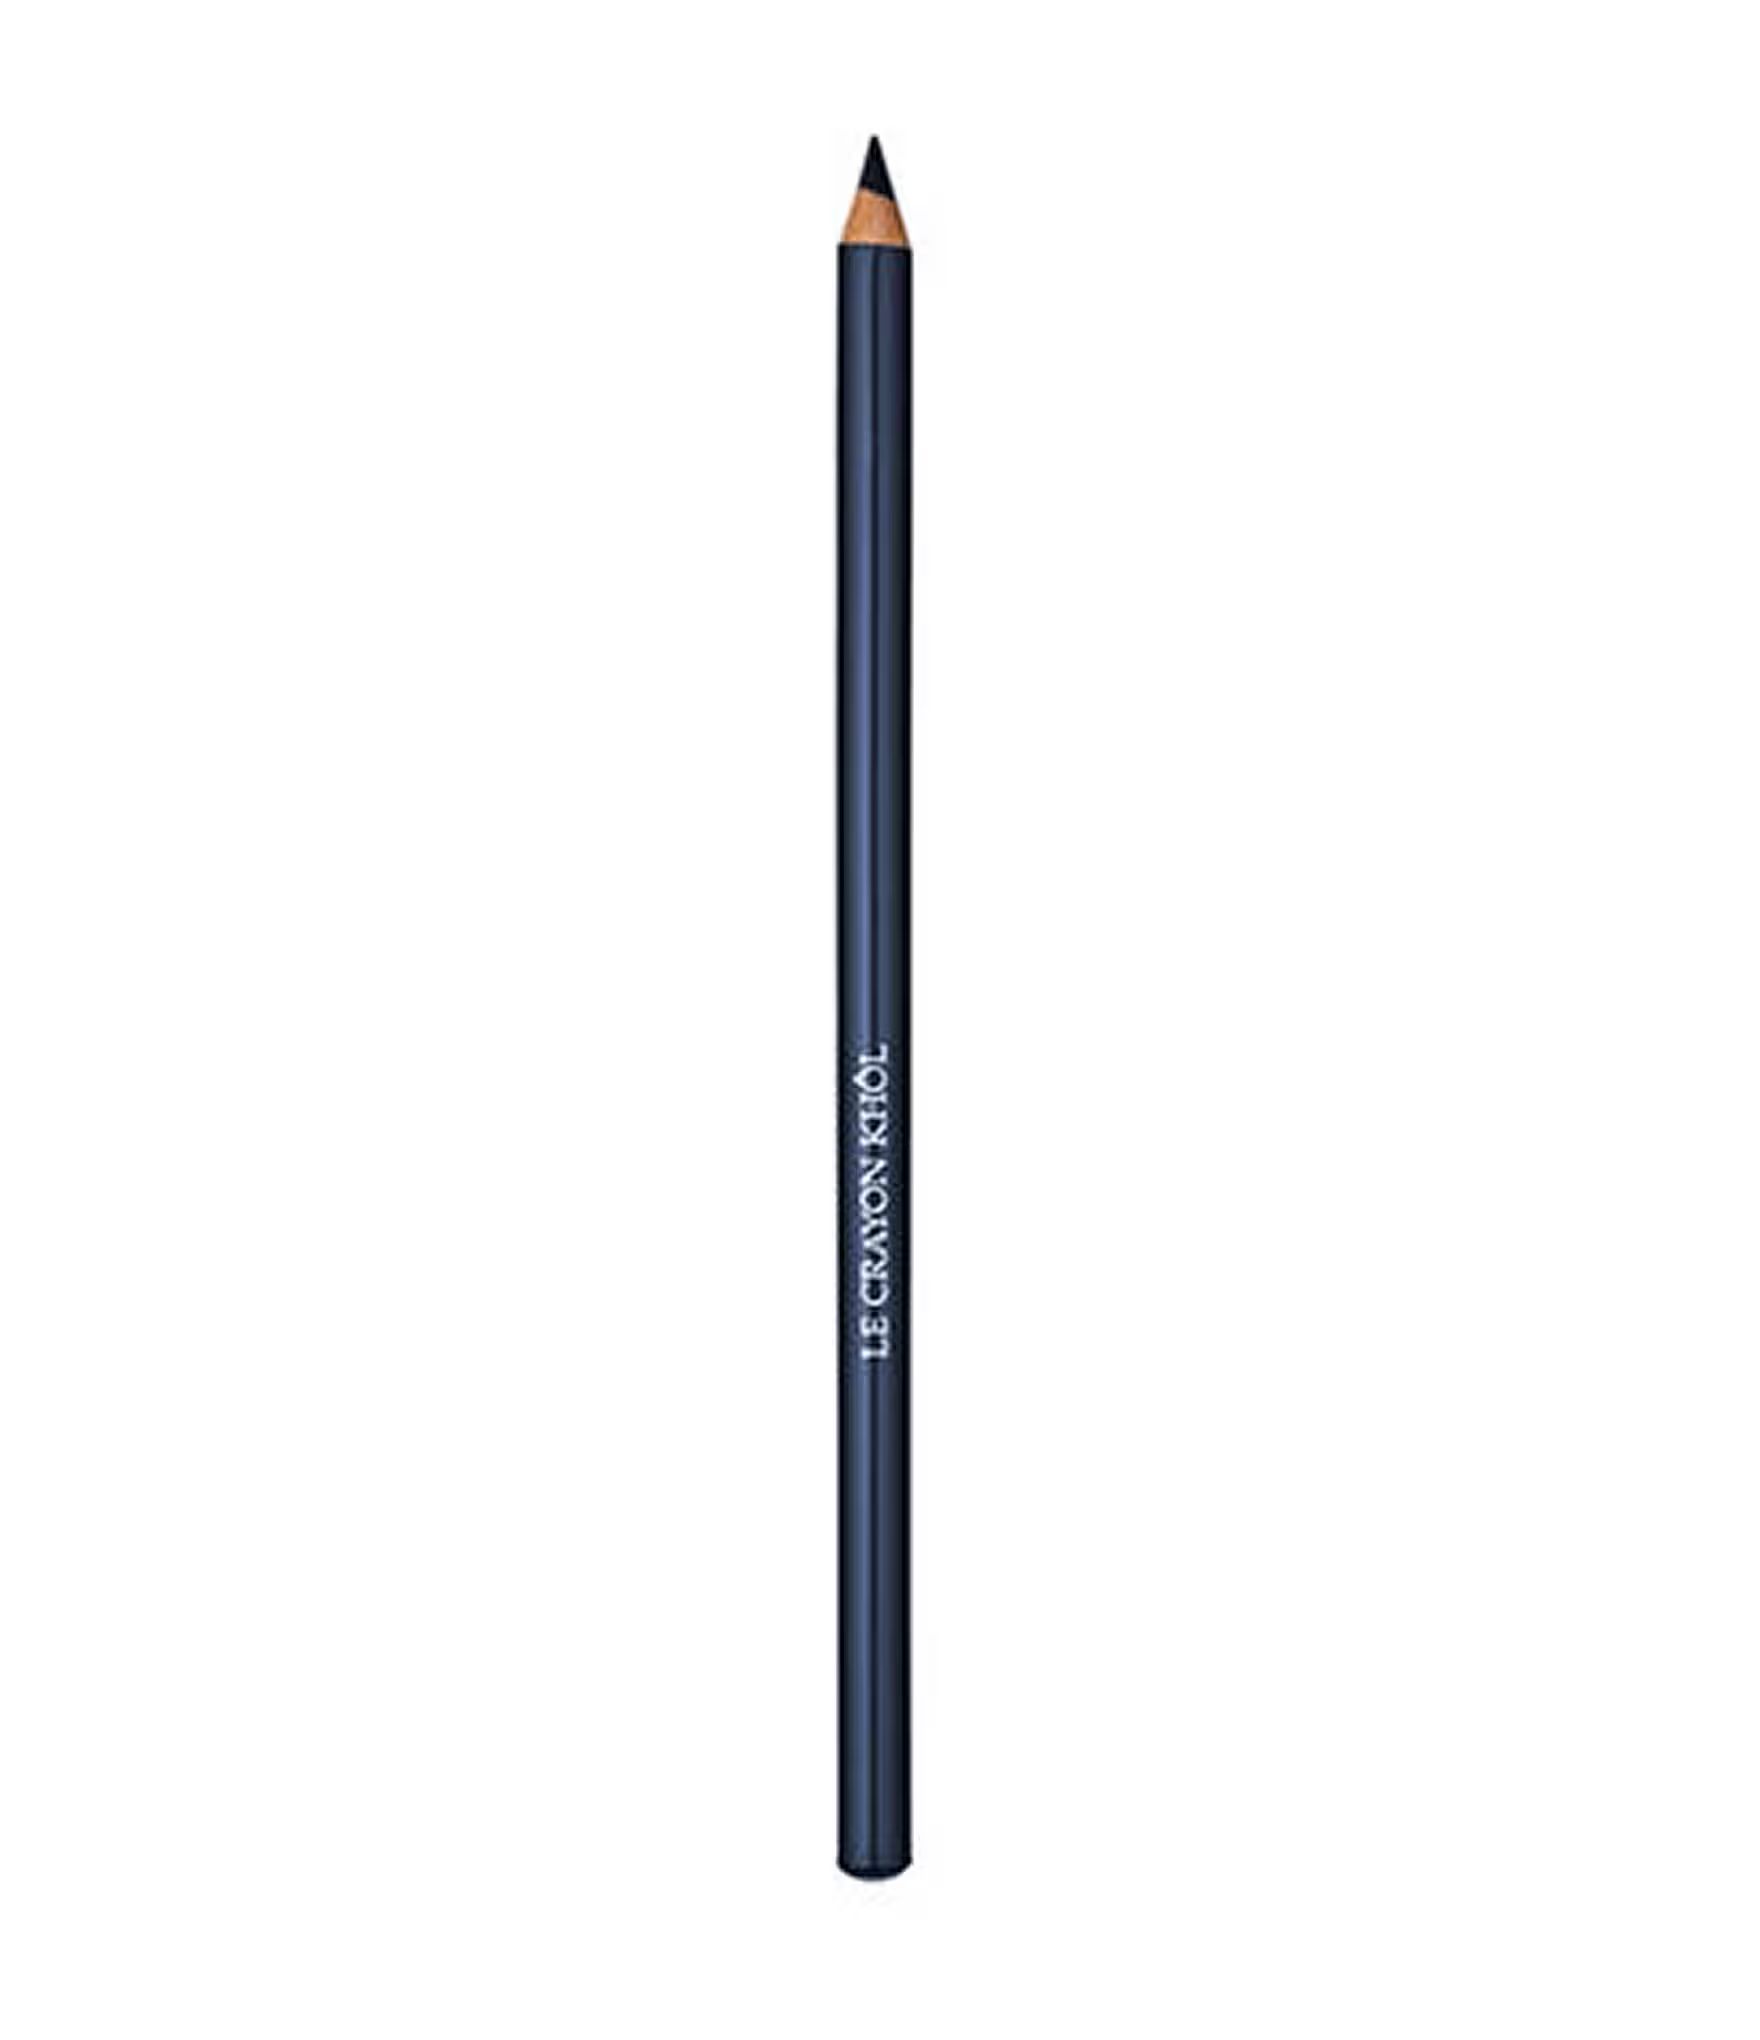 Lancome Le Crayon Khol EyeLiner | Dillards Inc.